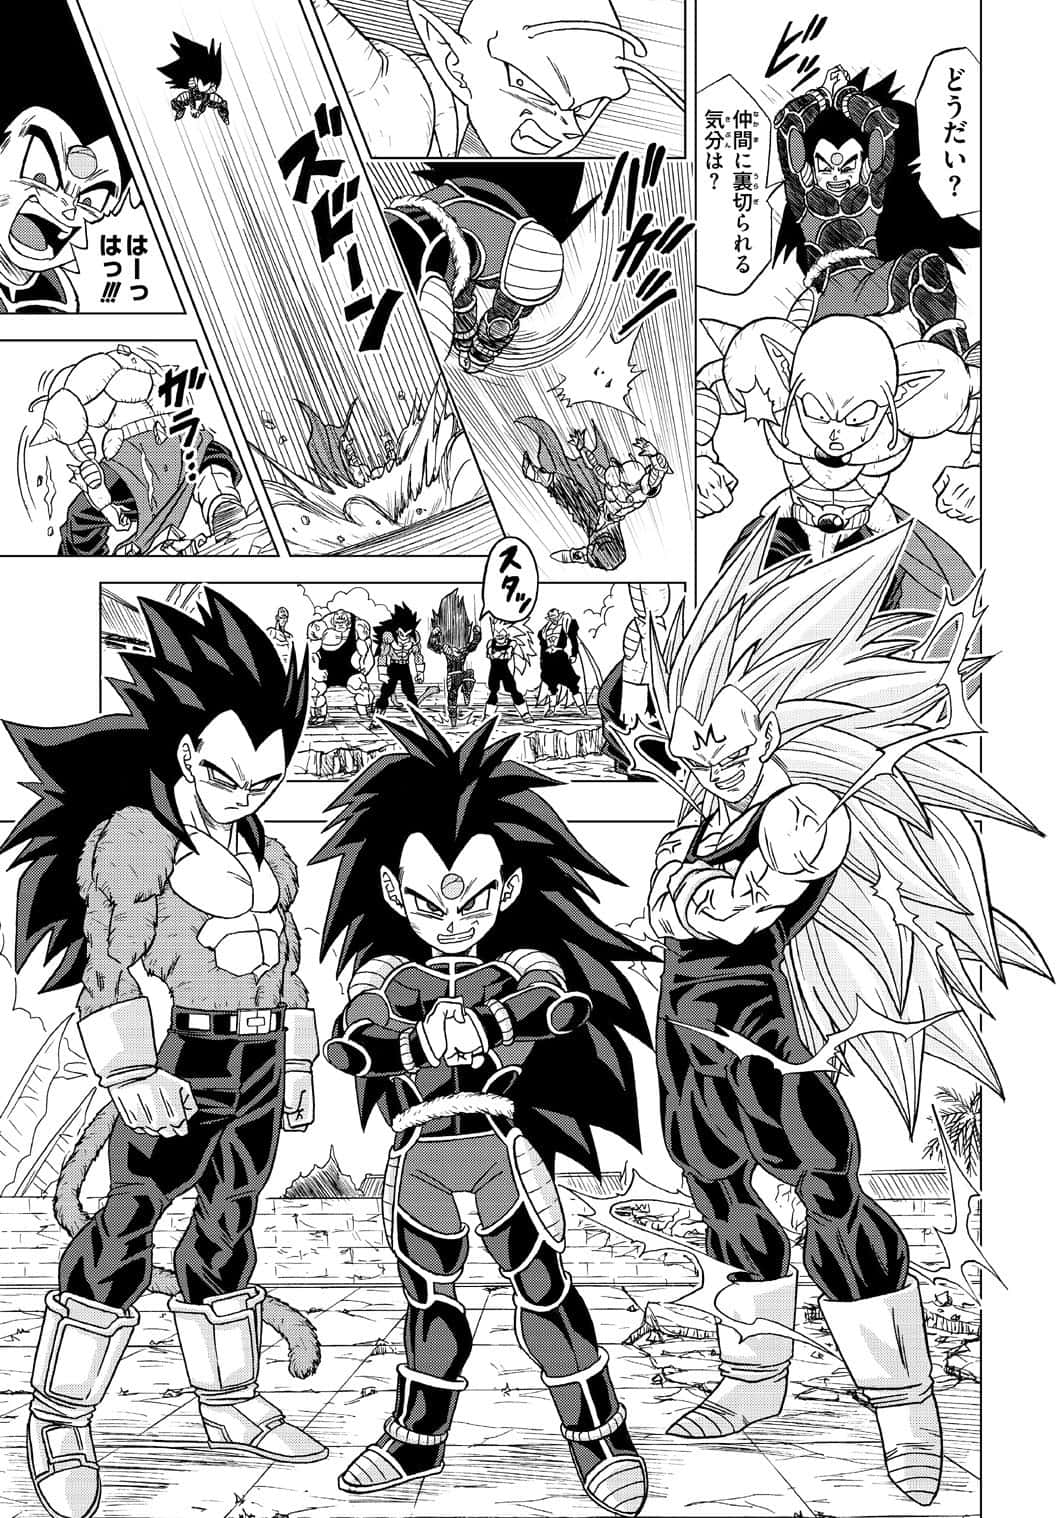 Dragon Ball Super Manga 1057 x 1518 wallpaper Wallpaper